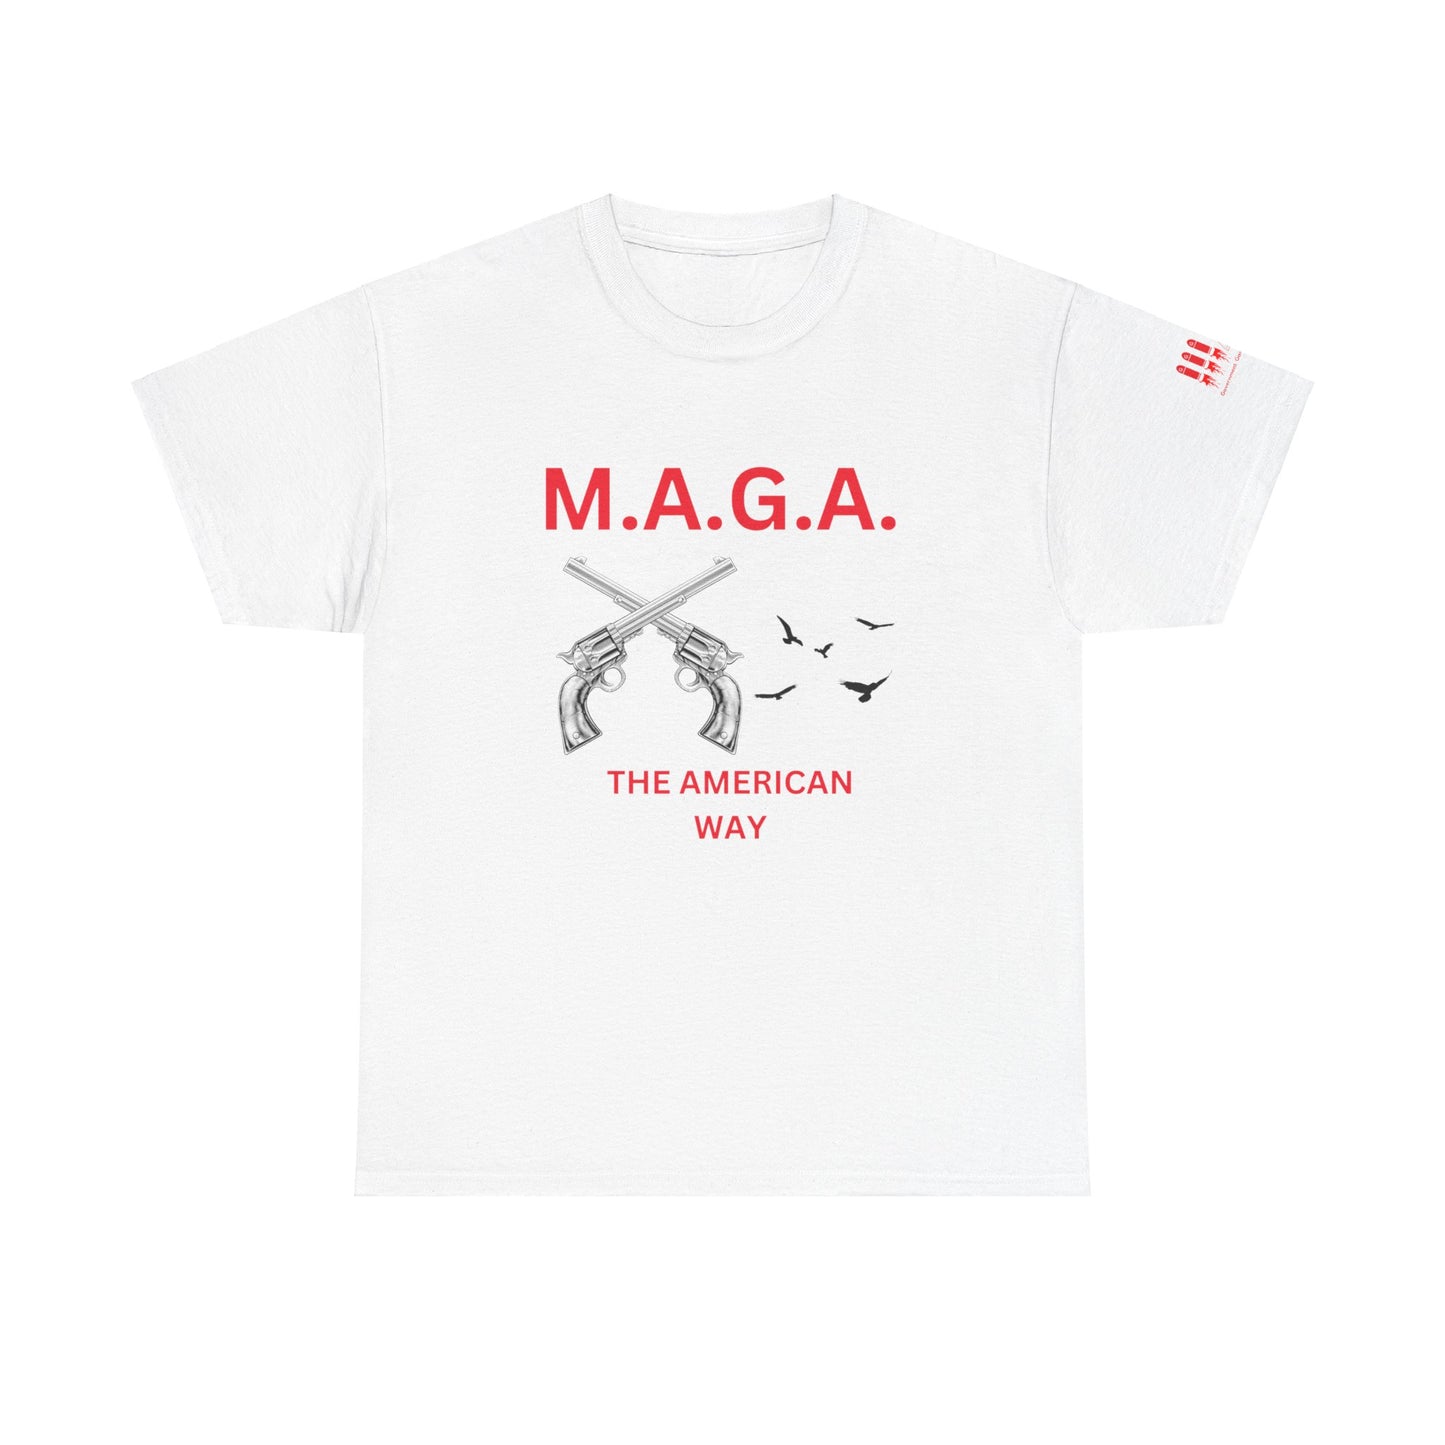 3Gs- MAGA. tee shirt